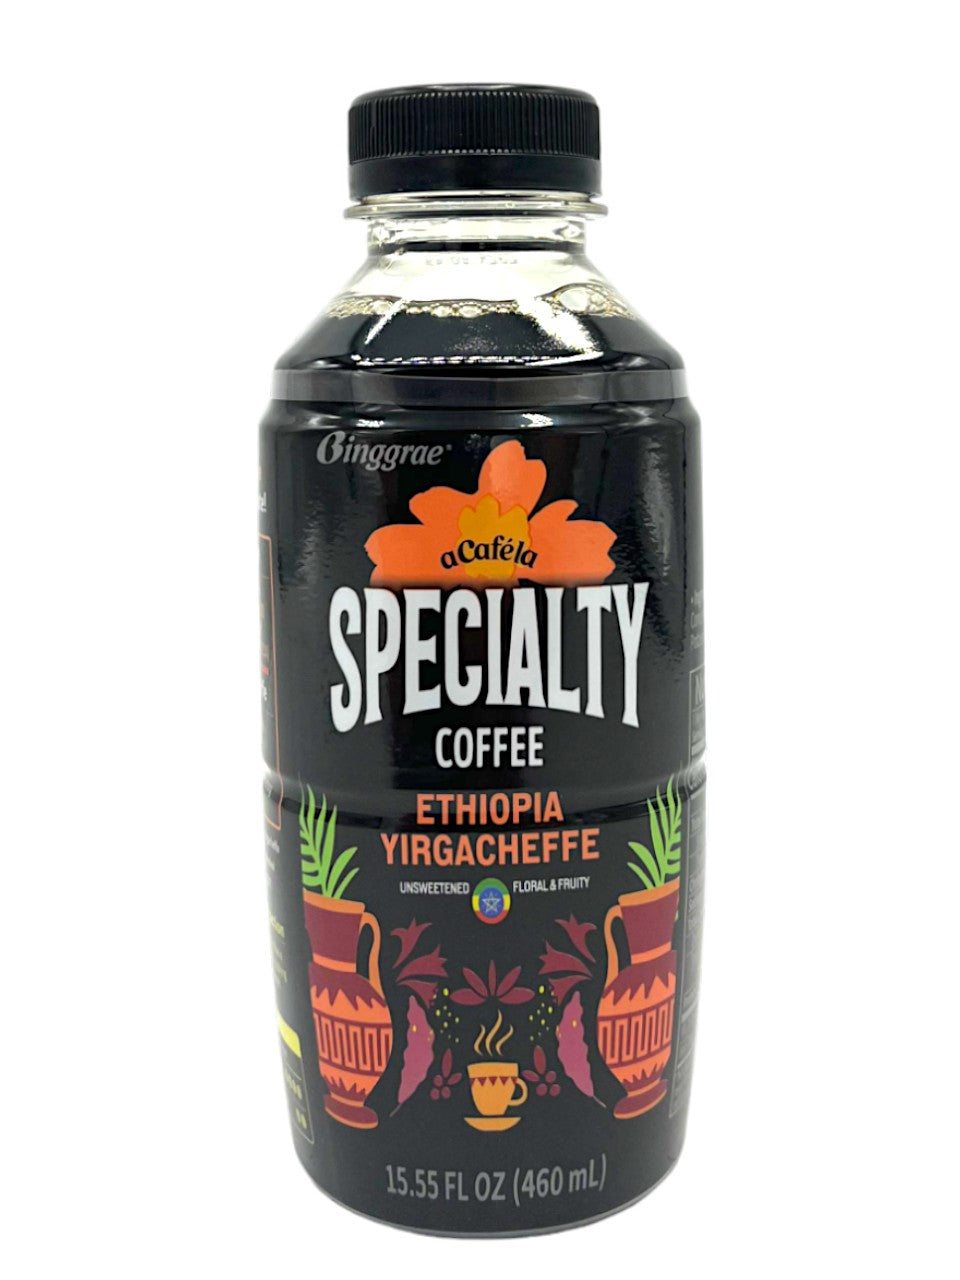 aCafela Specialty Coffee Ethiopia 460ml